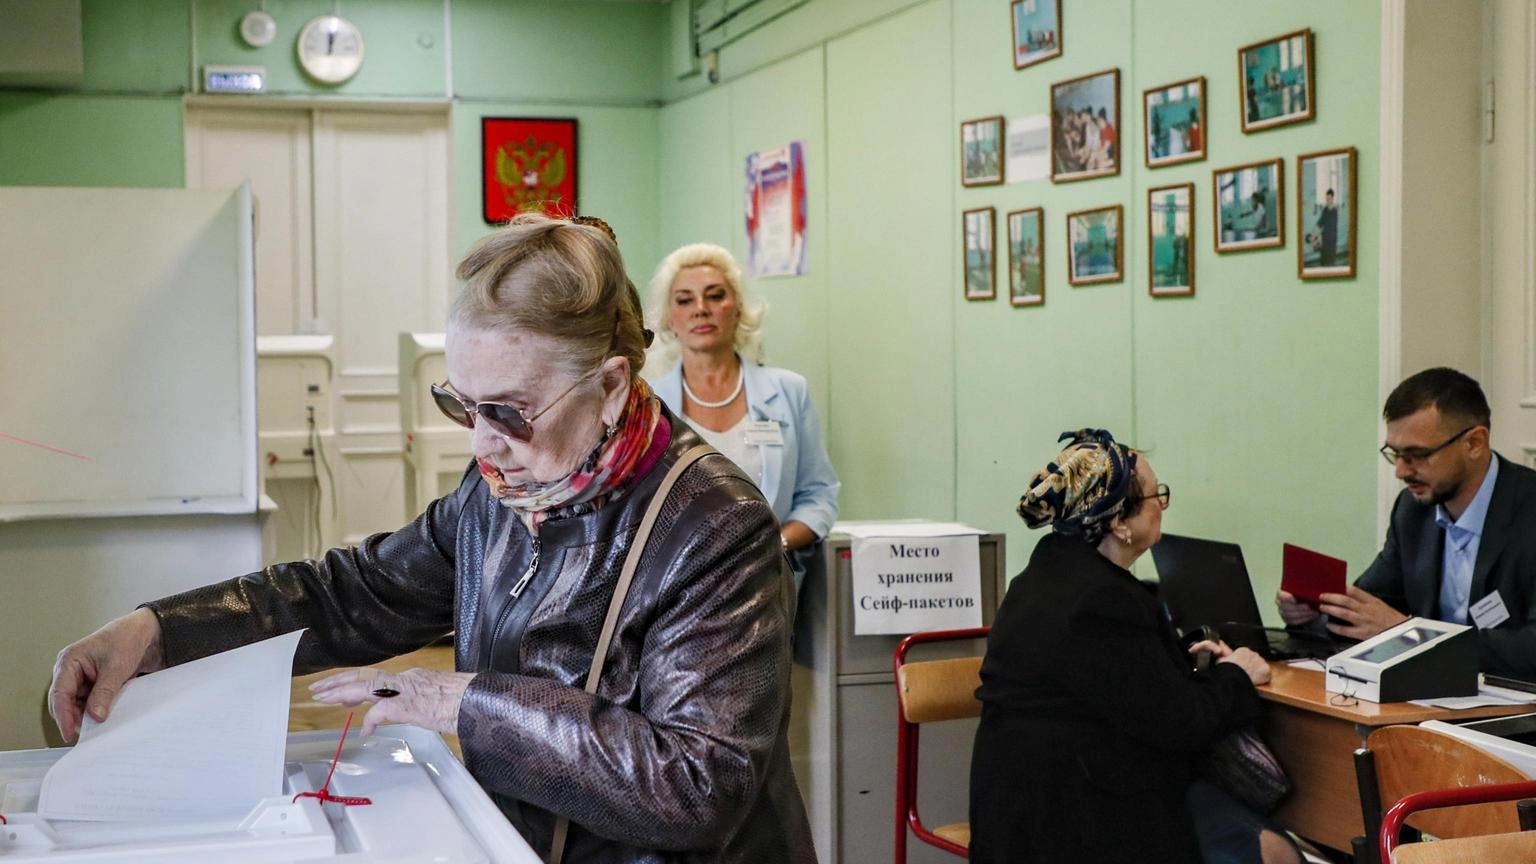 Dati parziali, partito di Putin vince in 4 regioni ucraine